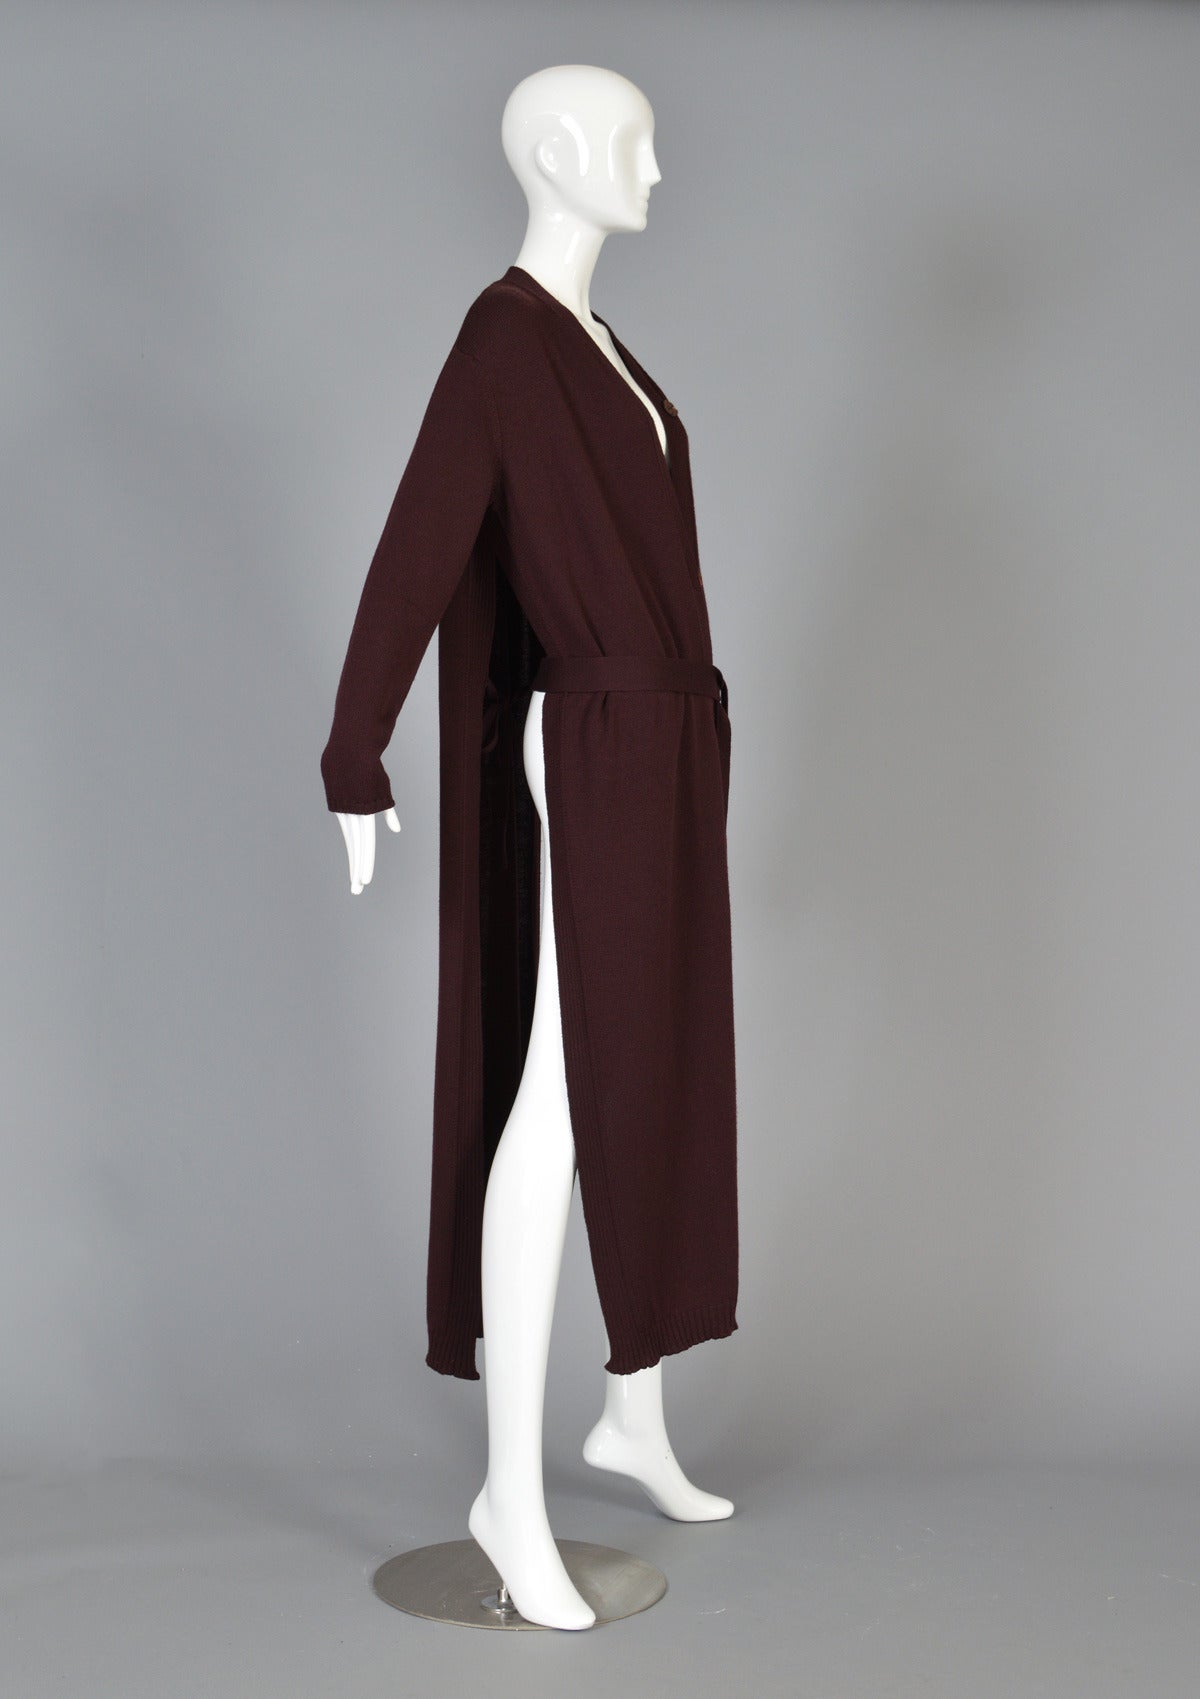 Jean Paul Gaultier Convertible Mahogany Knit Cardigan or Wrap Dress 3